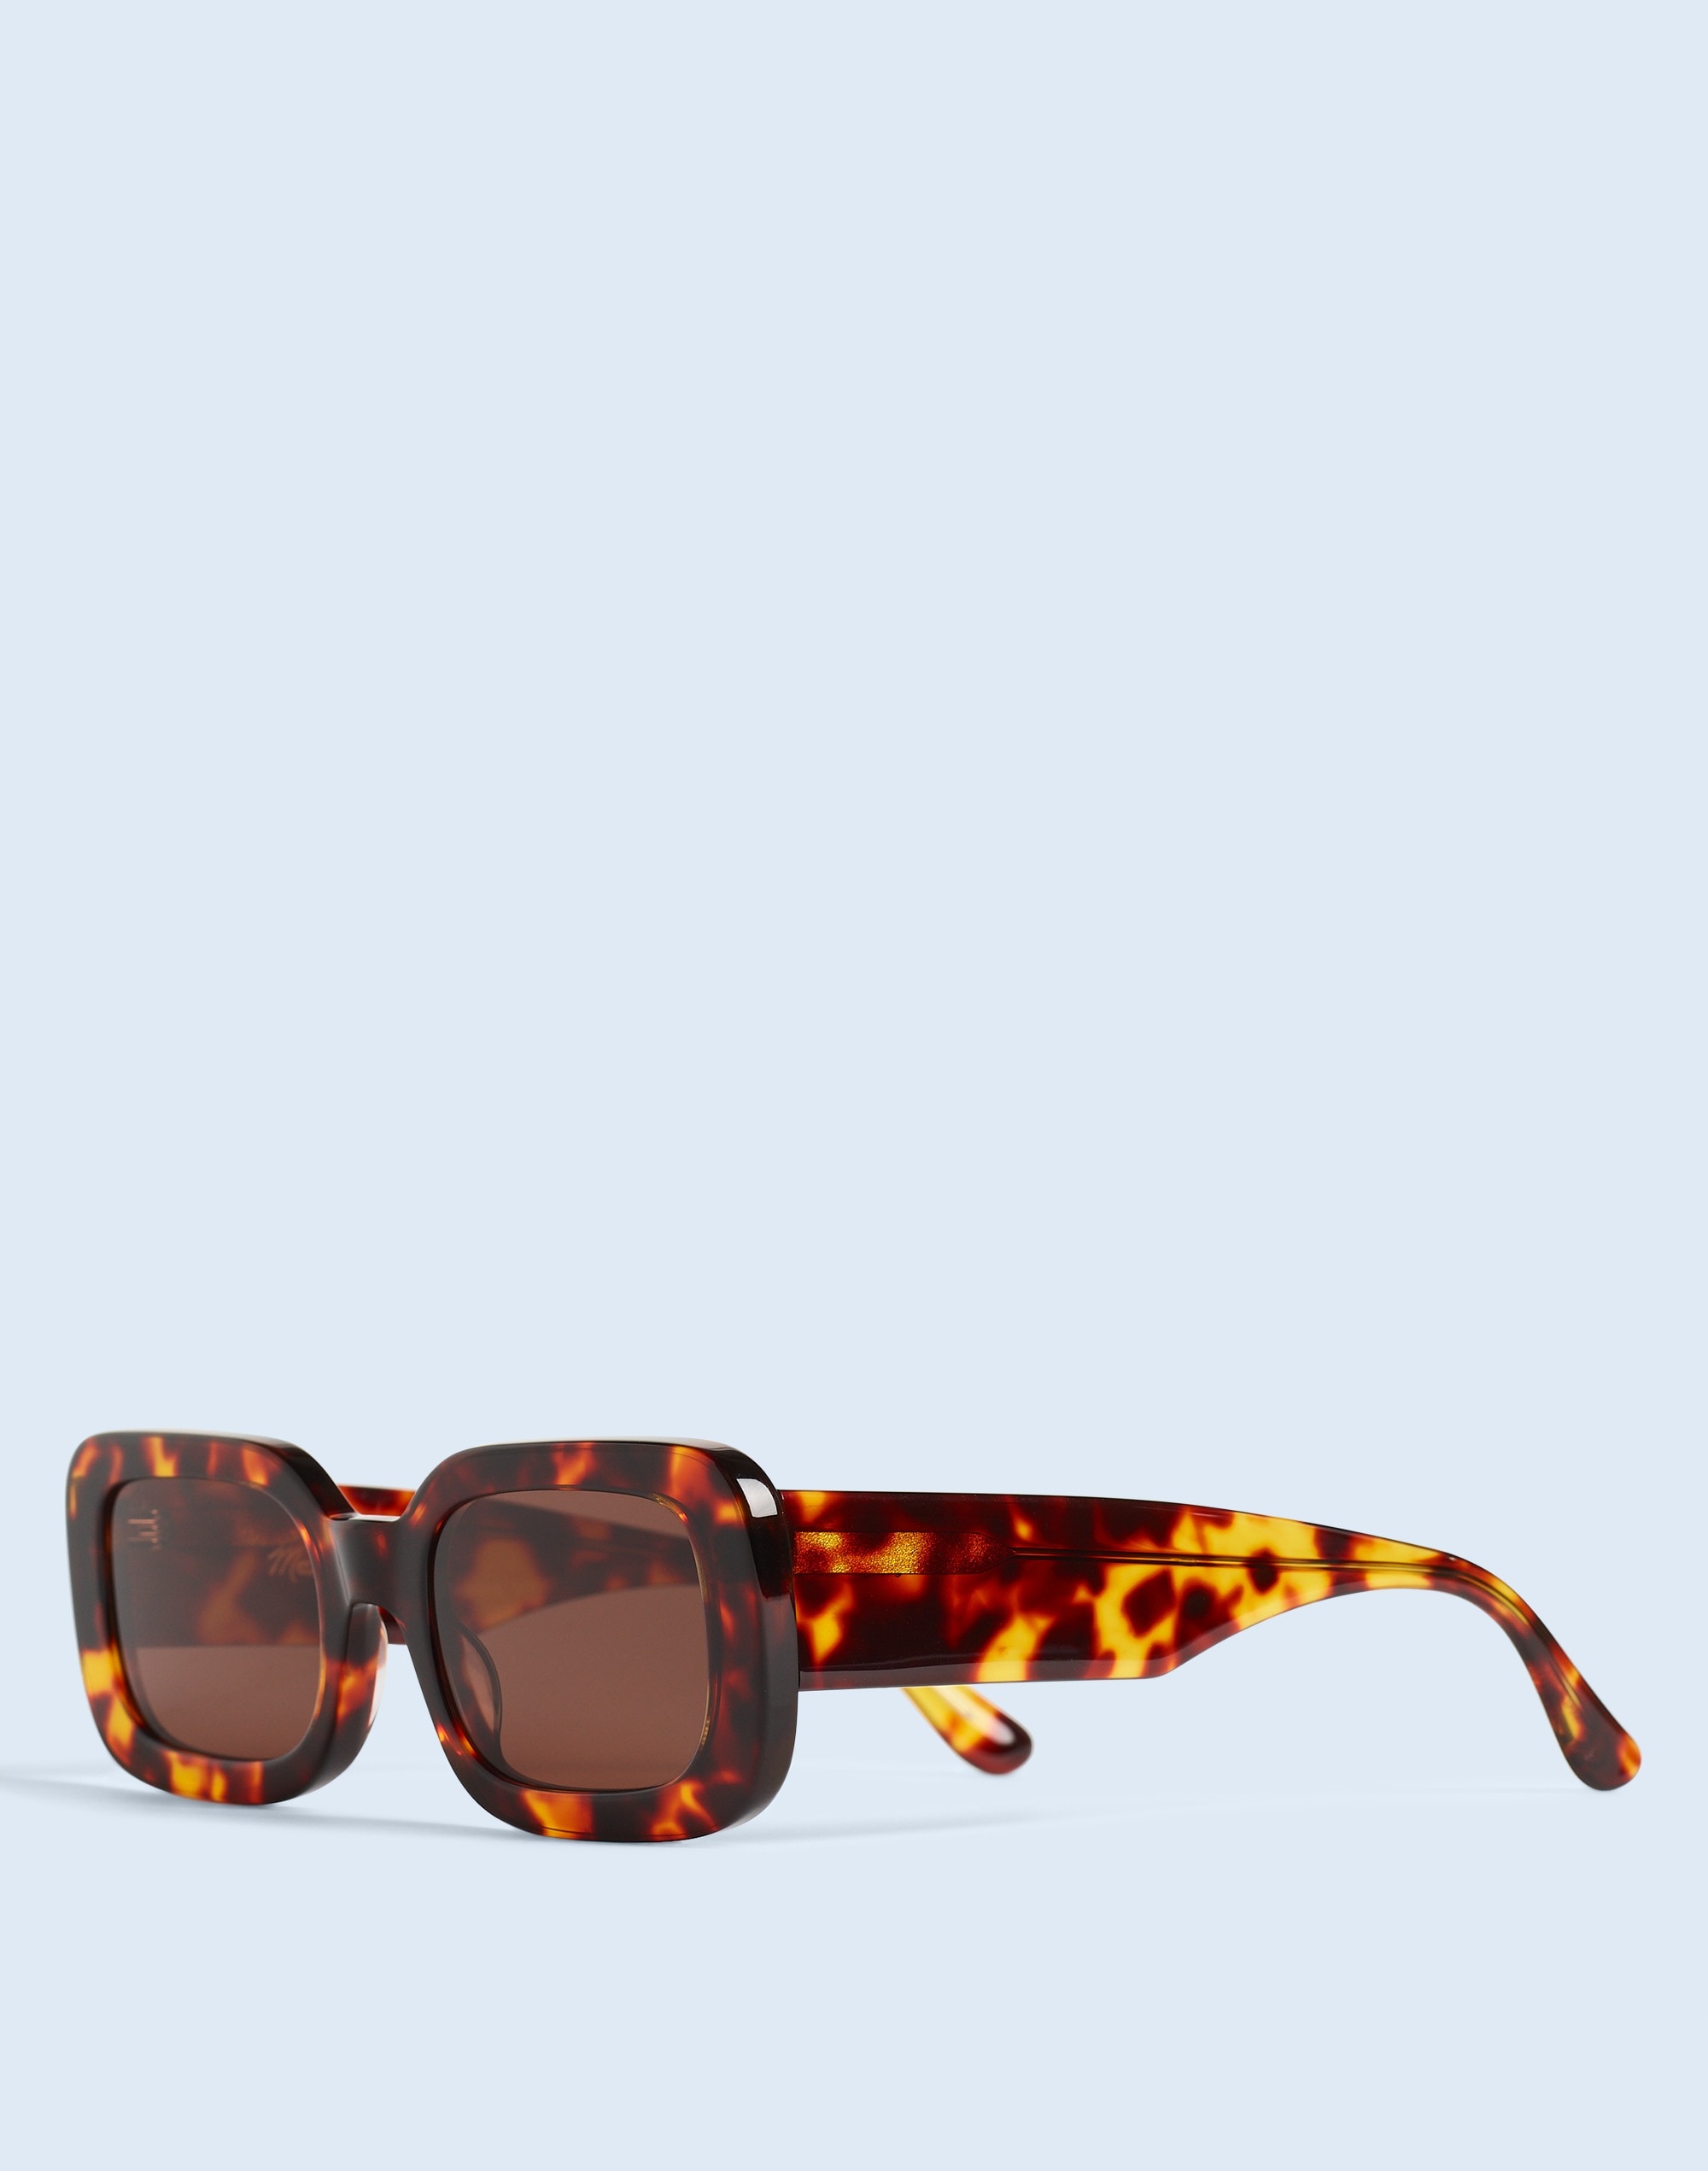 Mw Linbrook Sunglasses In Dark Tortoise